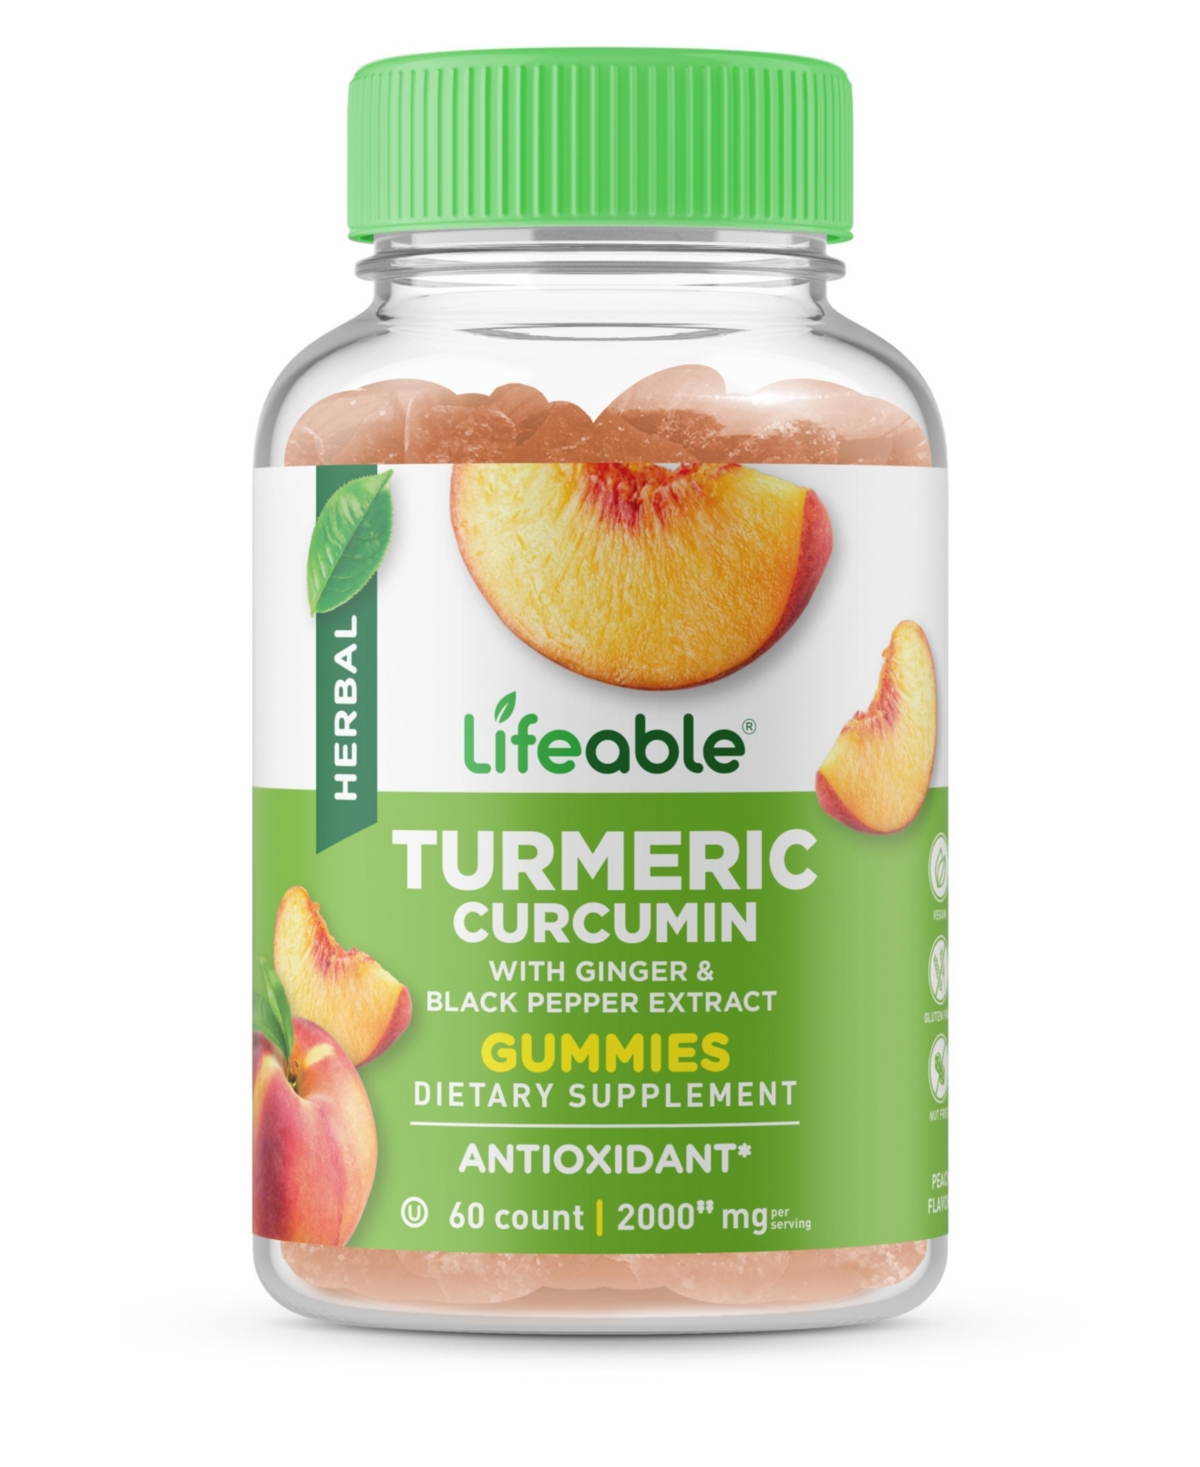 Turmeric Curcumin with Ginger & Black Pepper Extract Gummies - Bone Health And Immunity - Great Tasting Natural Flavor Vitamins - 60 Gummies